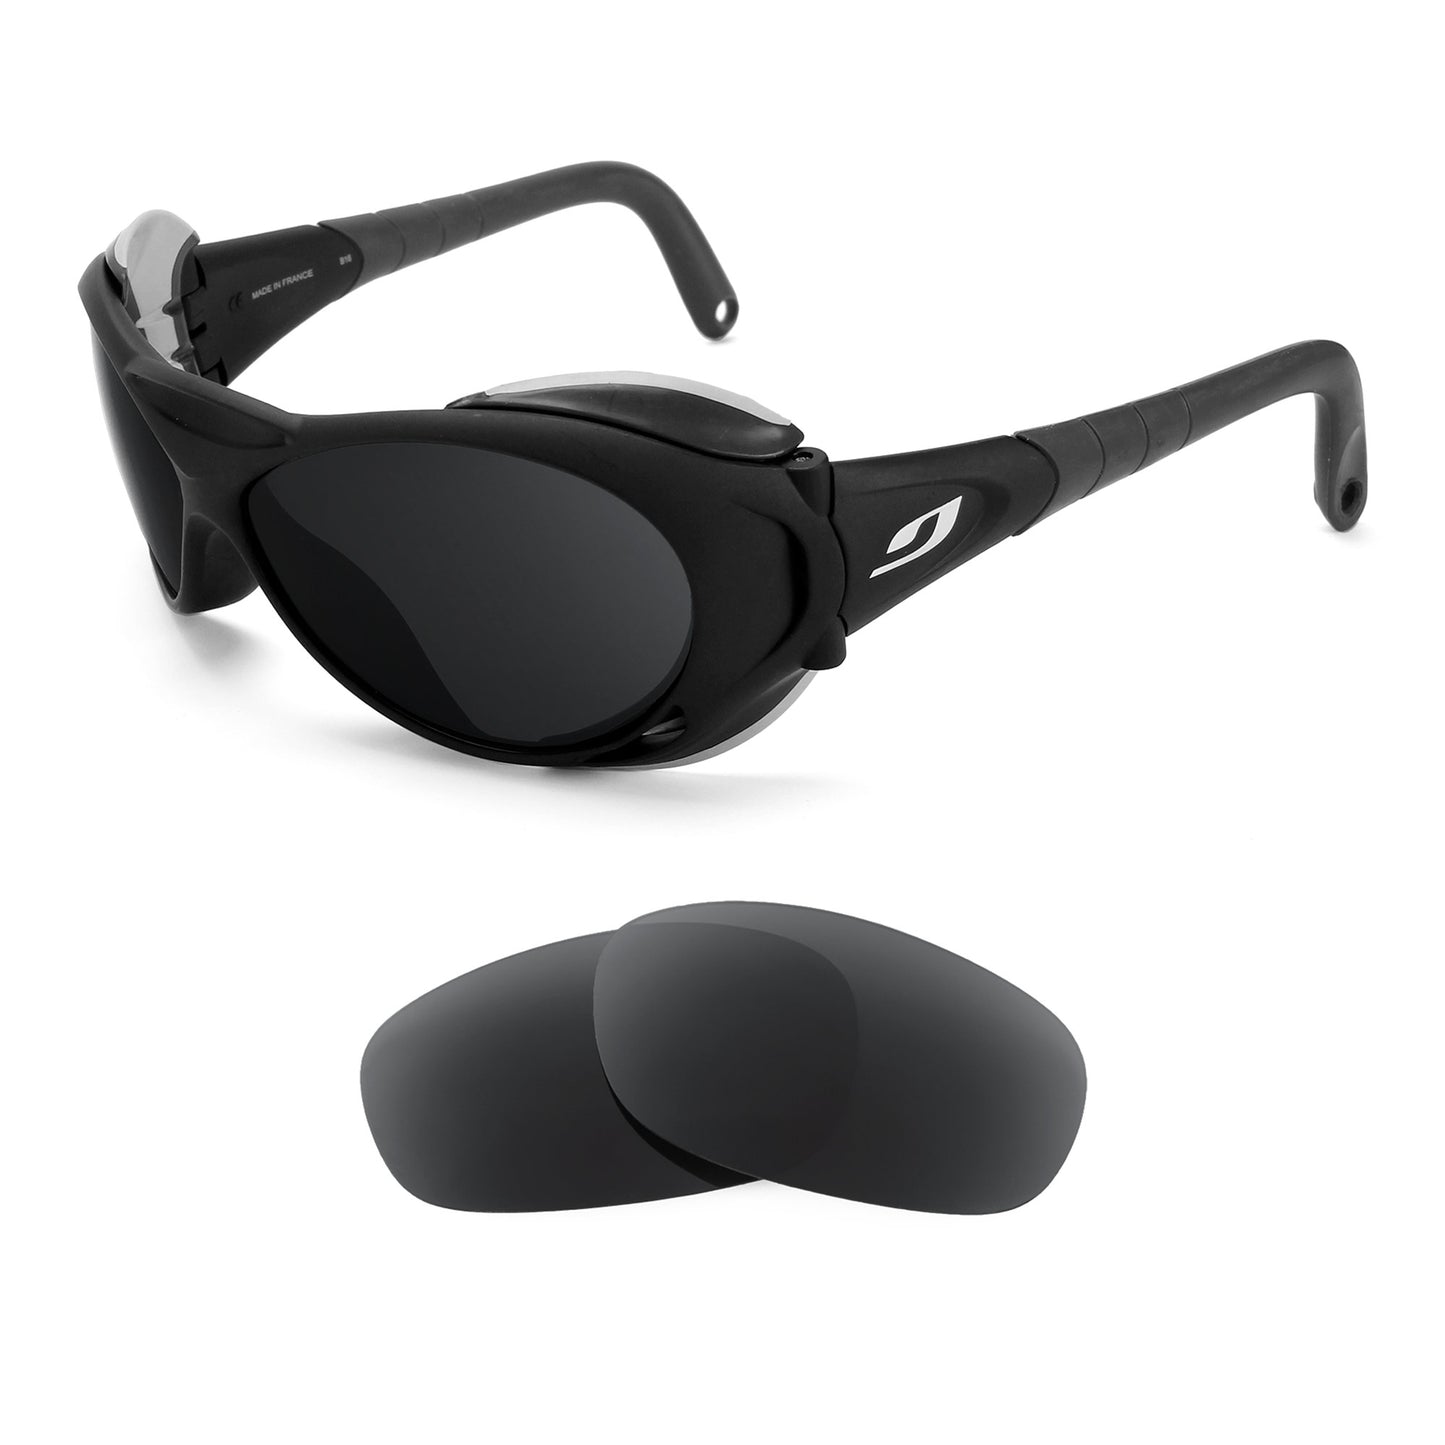 Julbo Explorer sunglasses with replacement lenses